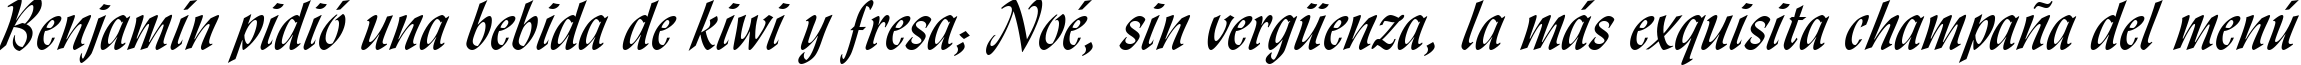 Пример написания шрифтом Lydian Cursive BT текста на испанском